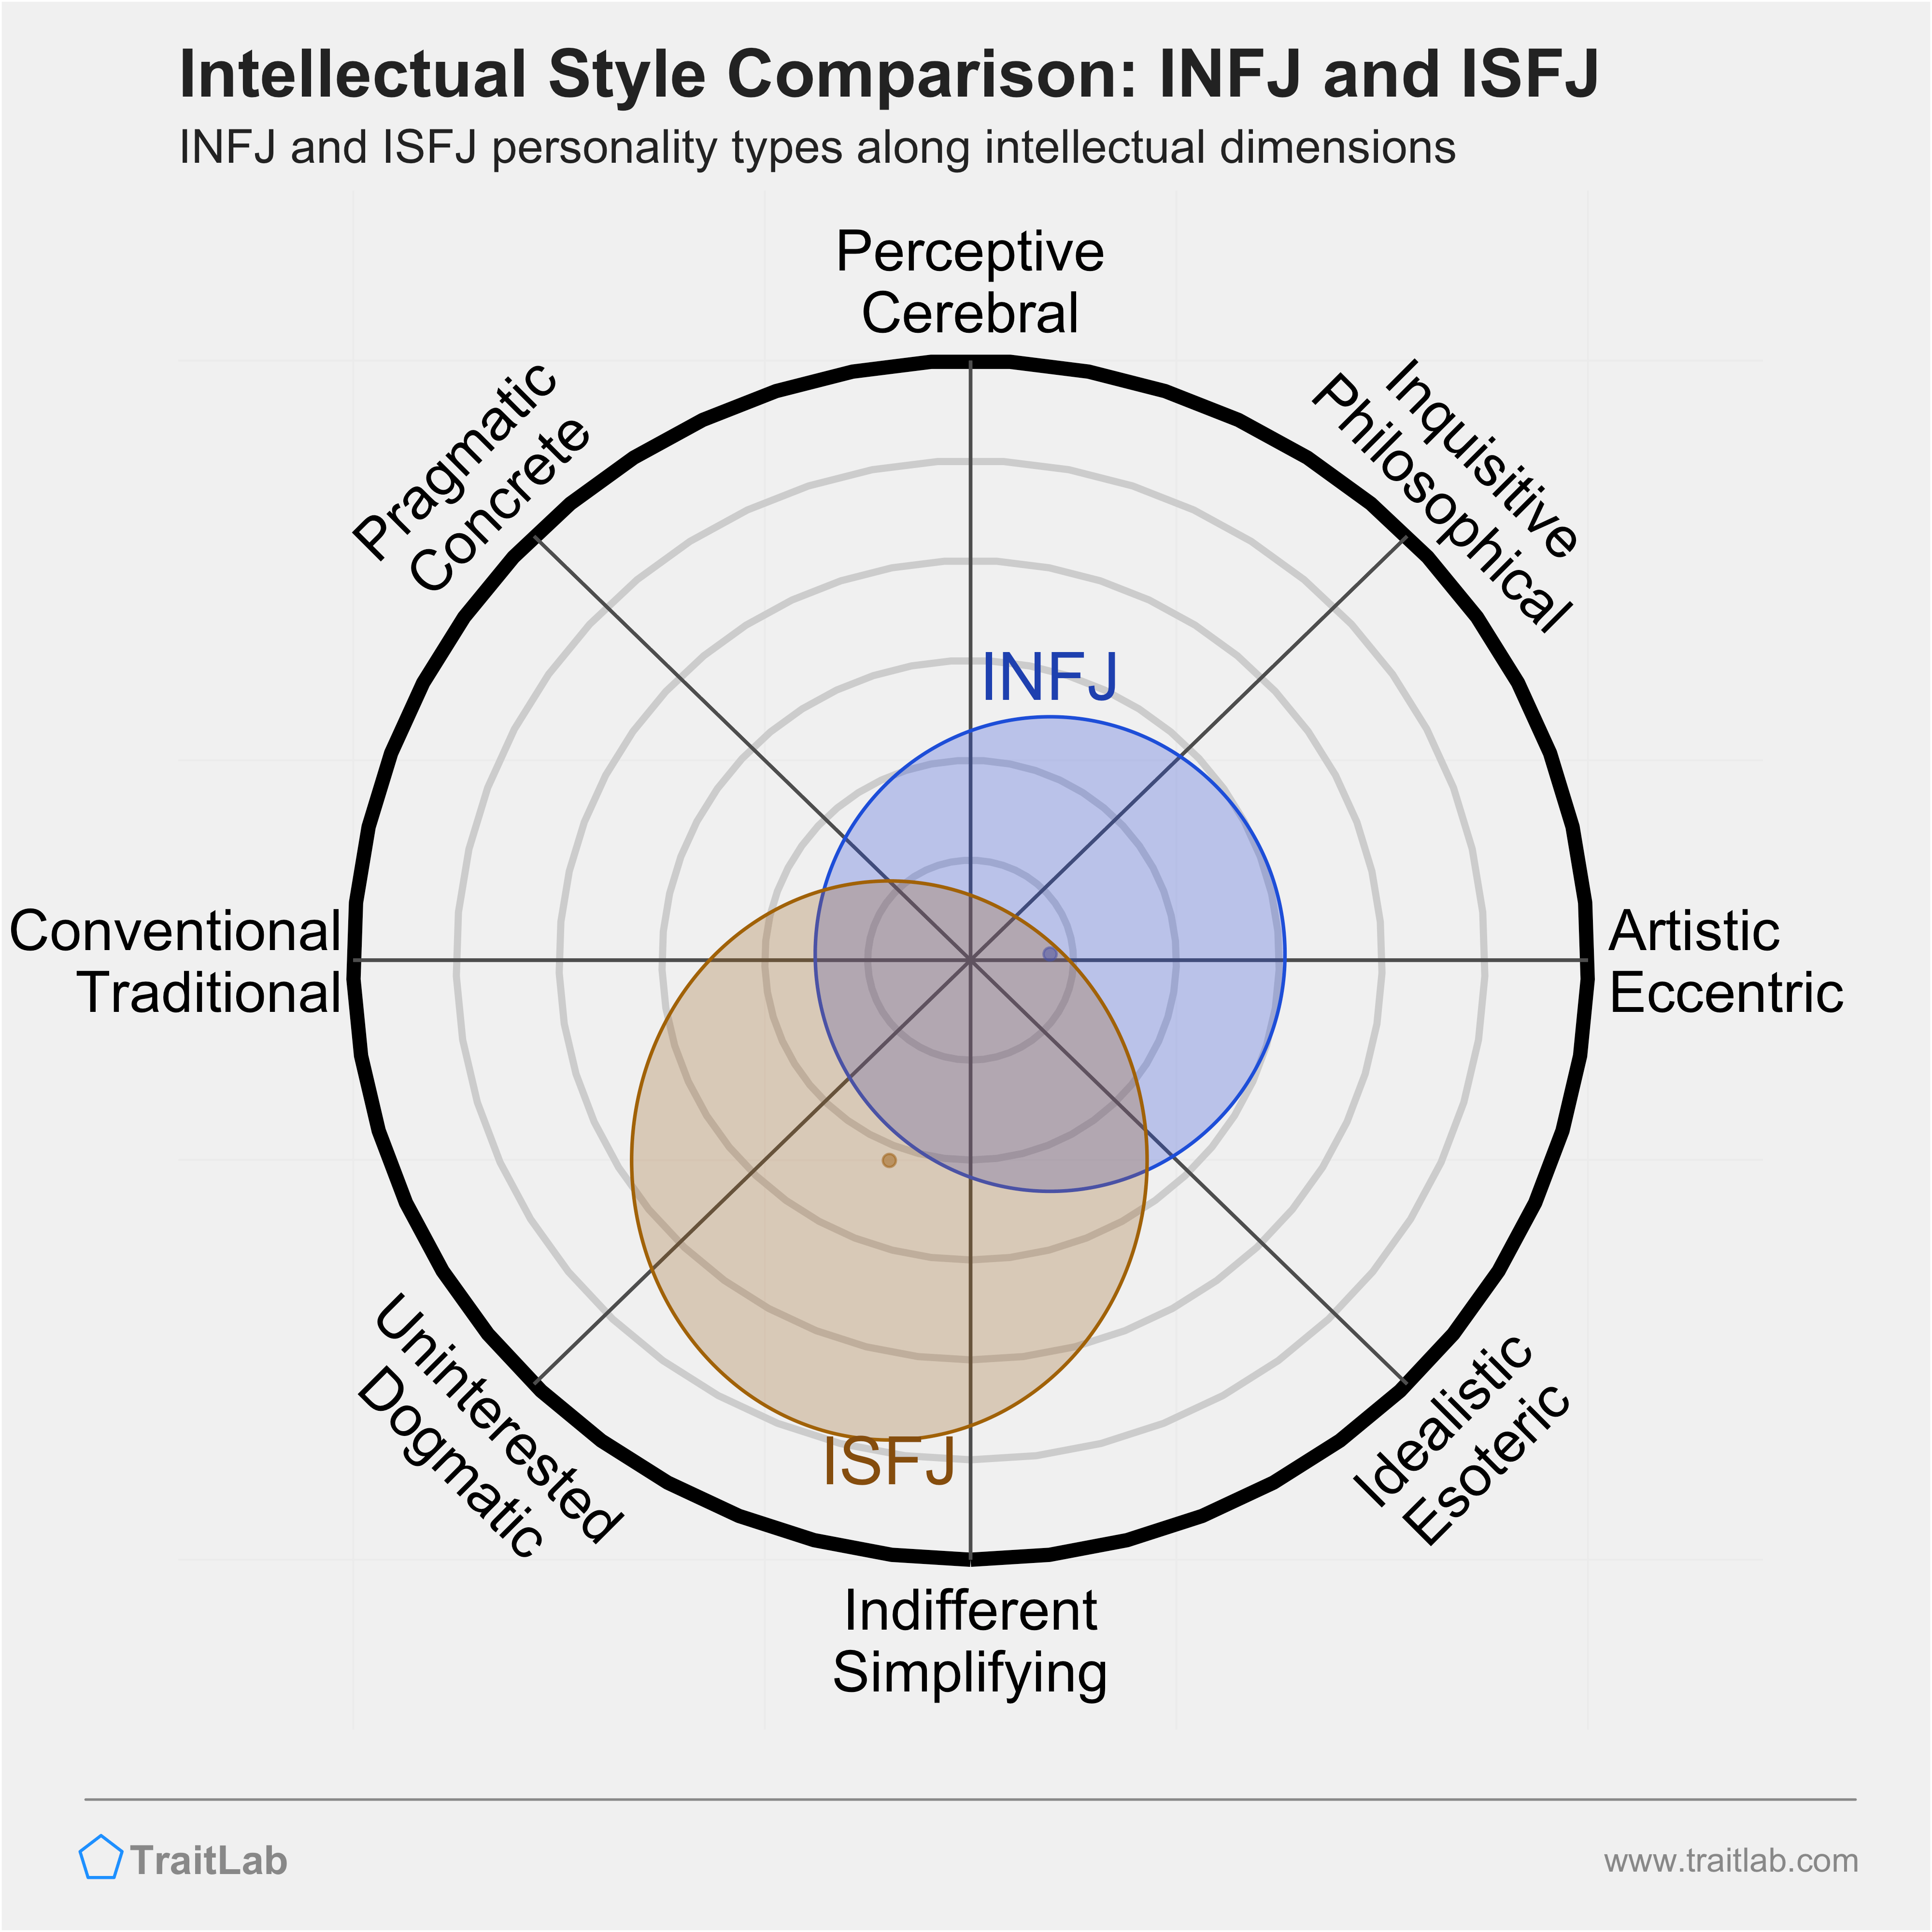 INFJ and ISFJ comparison across intellectual dimensions